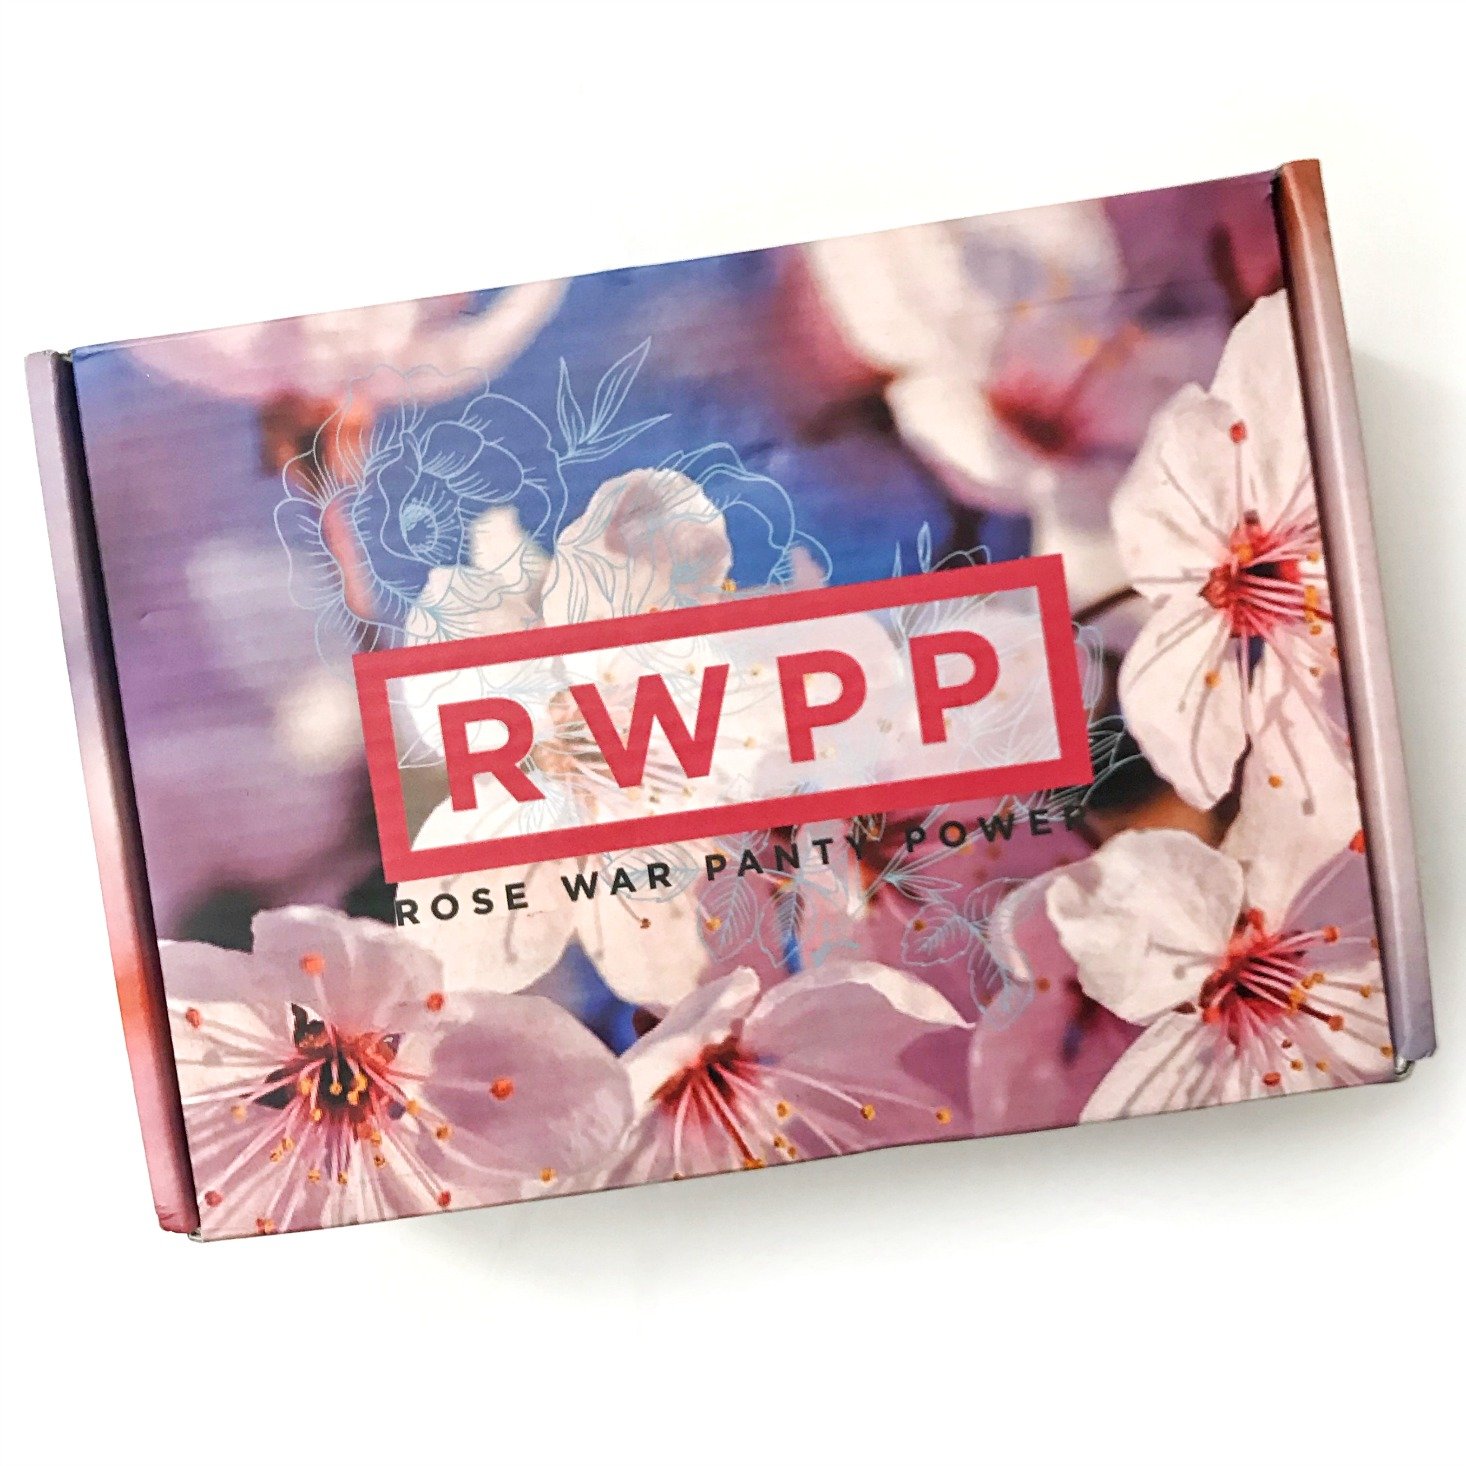 Rose War Panty Power Review + 50% Off Coupon – May 2018